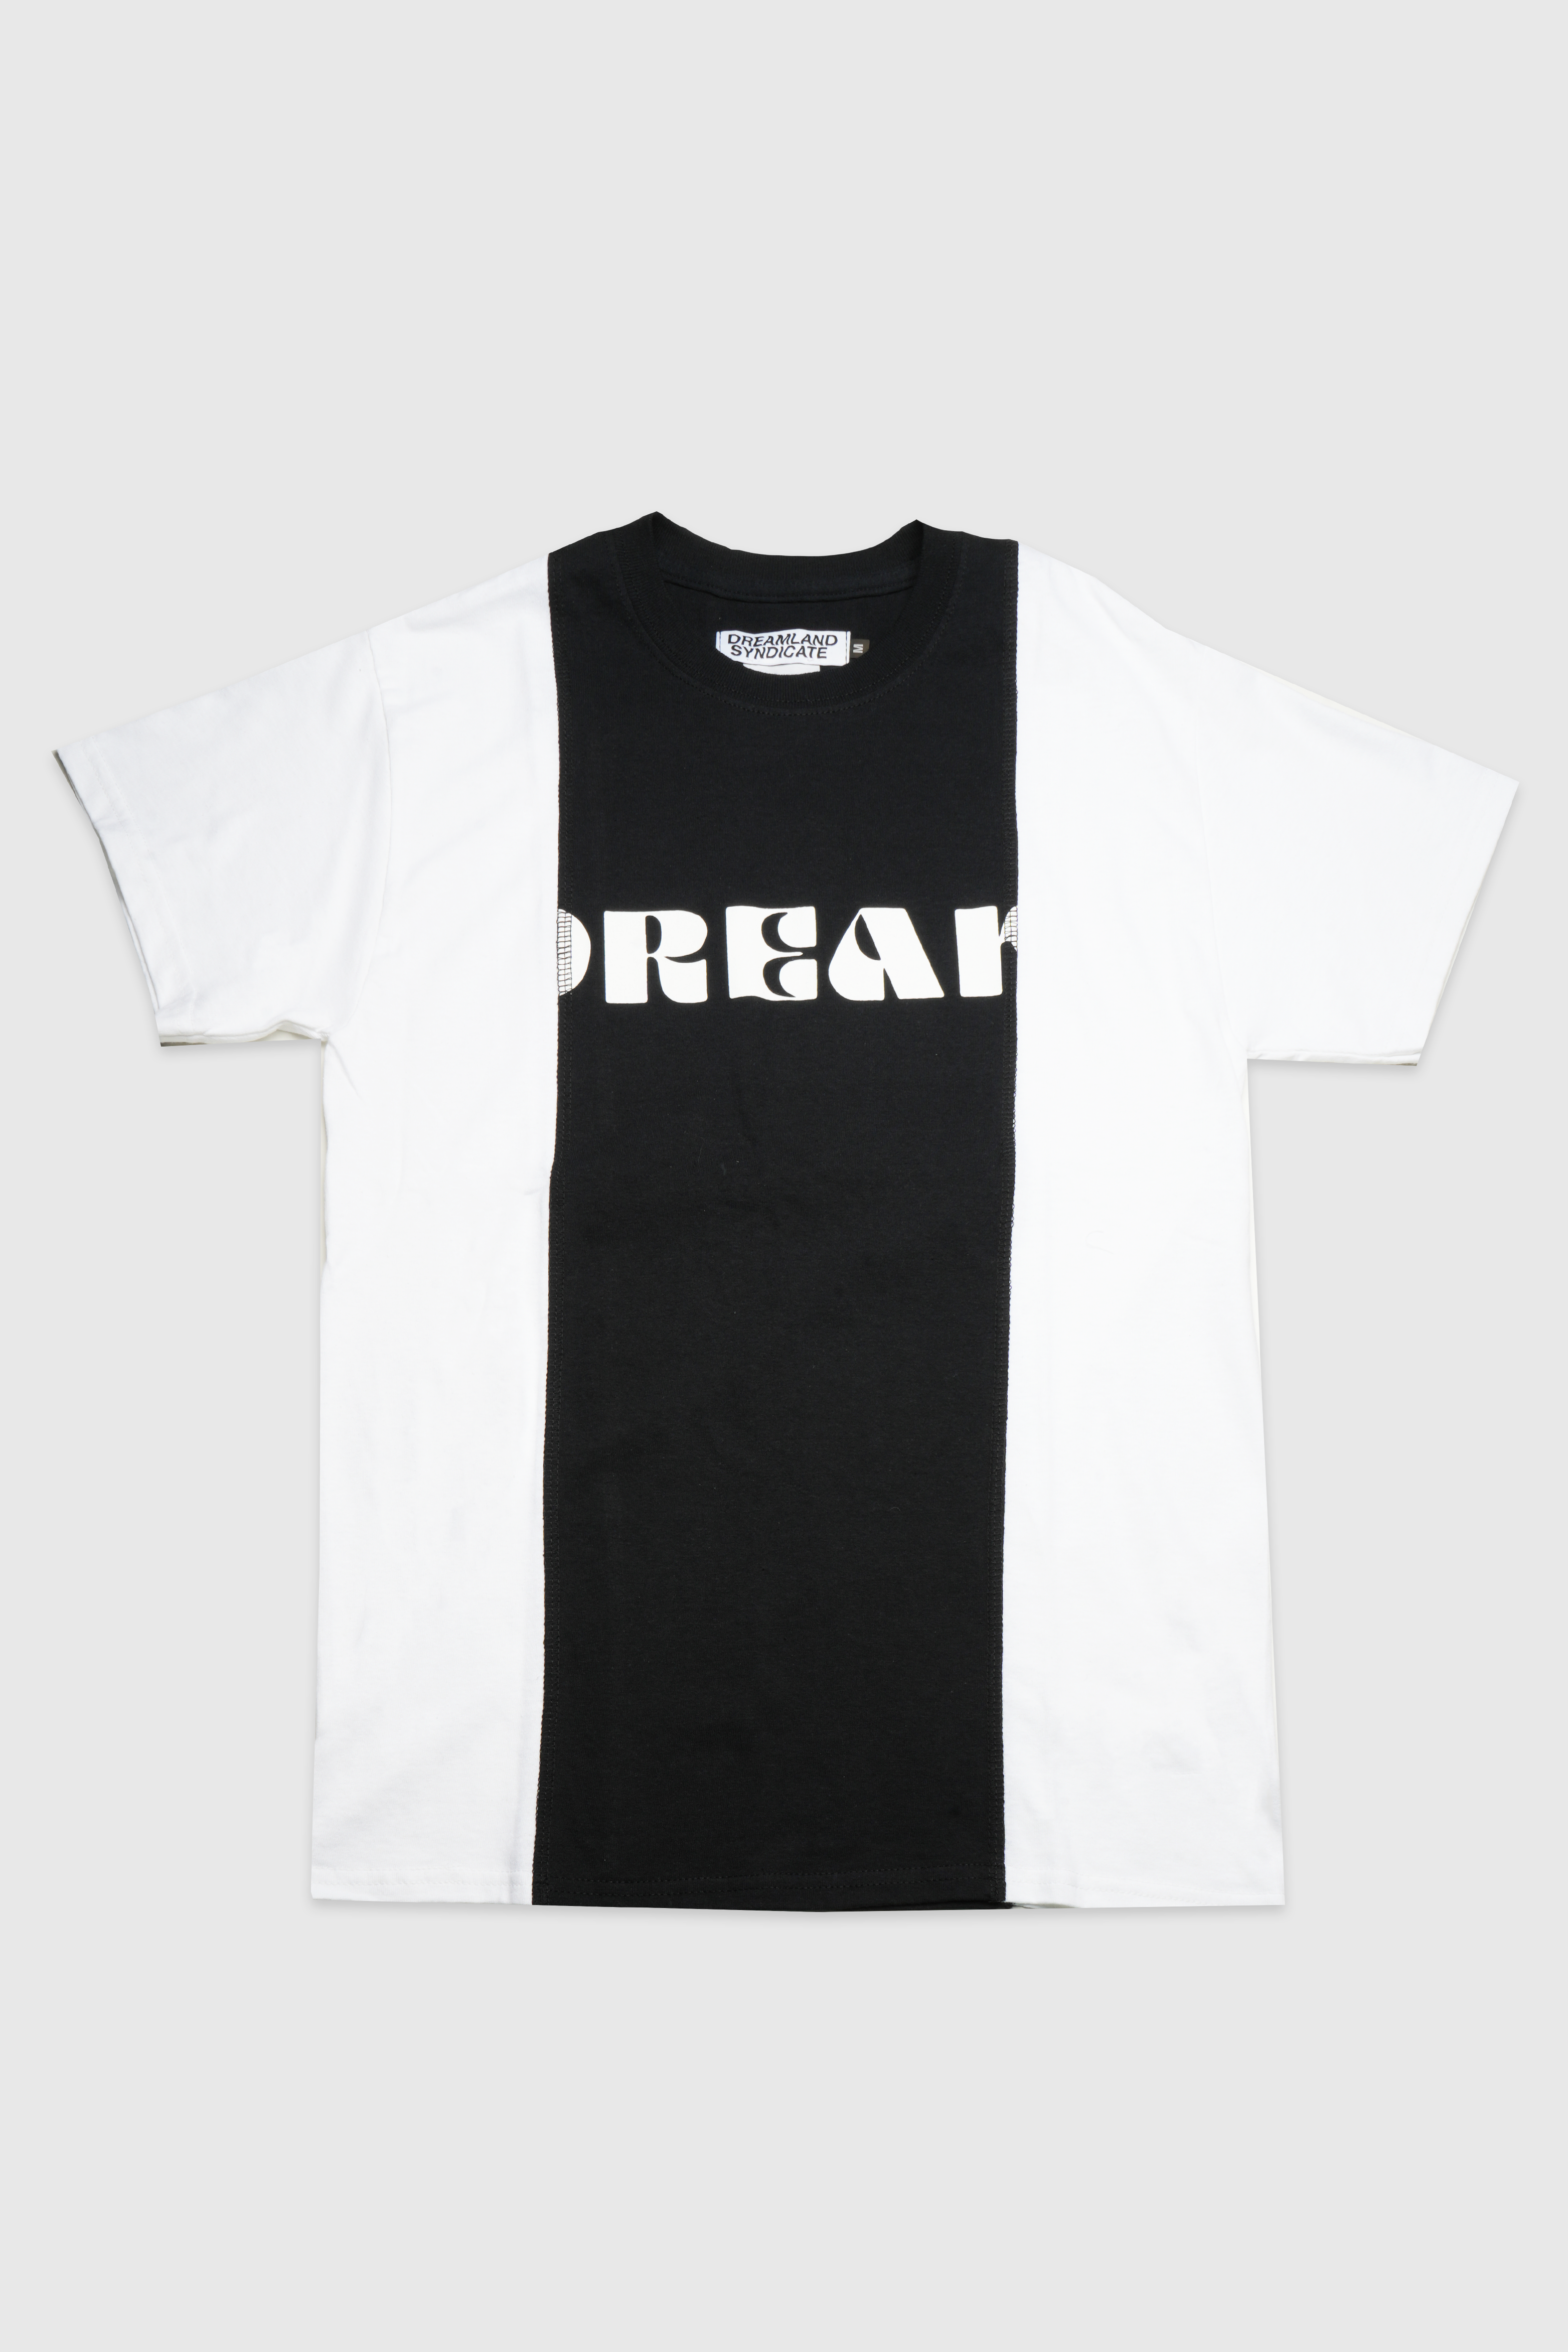 Selectshop FRAME - DREAMLAND SYNDICATE Cutup Tee M (B) T-Shirts Concept Store Dubai